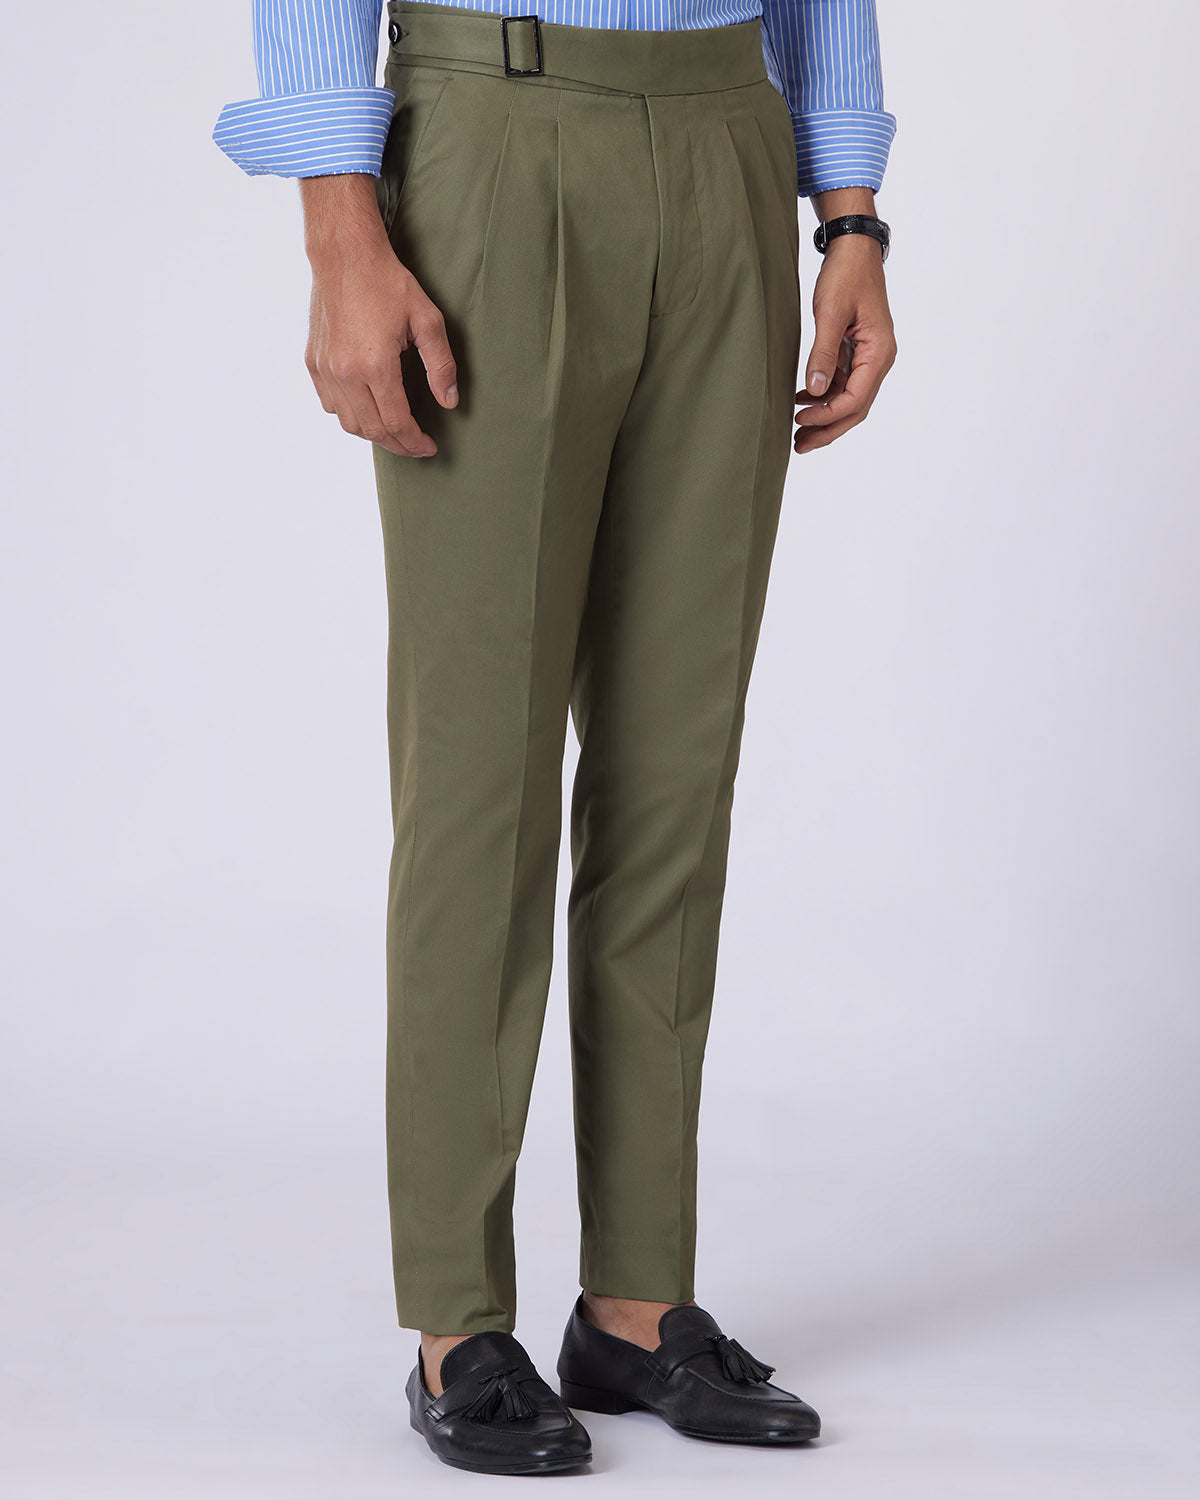 Virtuoso Neapolitan Dress Pants - Olive – Bombay Shirt Company